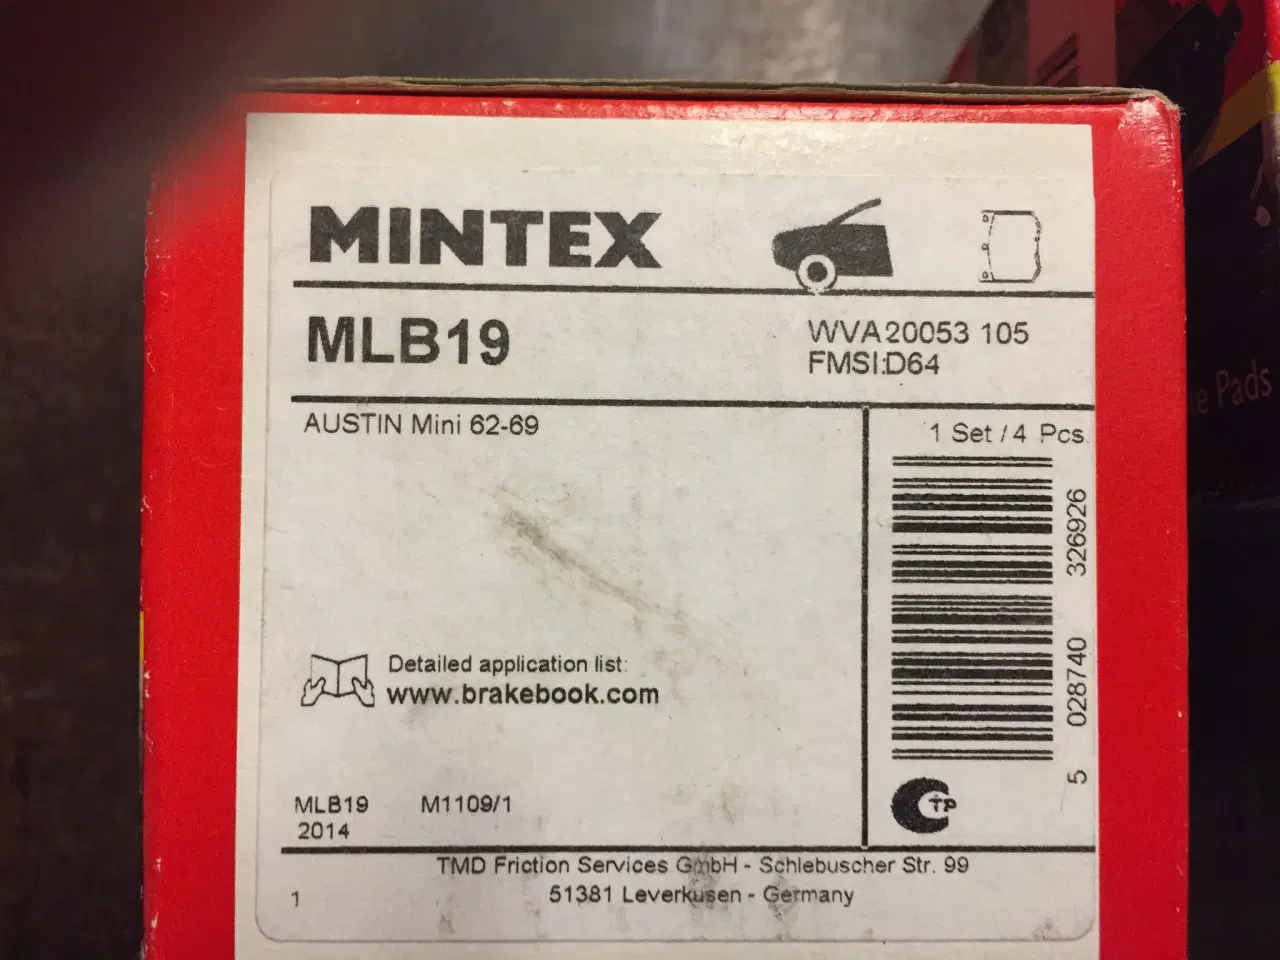 Billede 2 - Mintex Mlb19 til Mini Austin